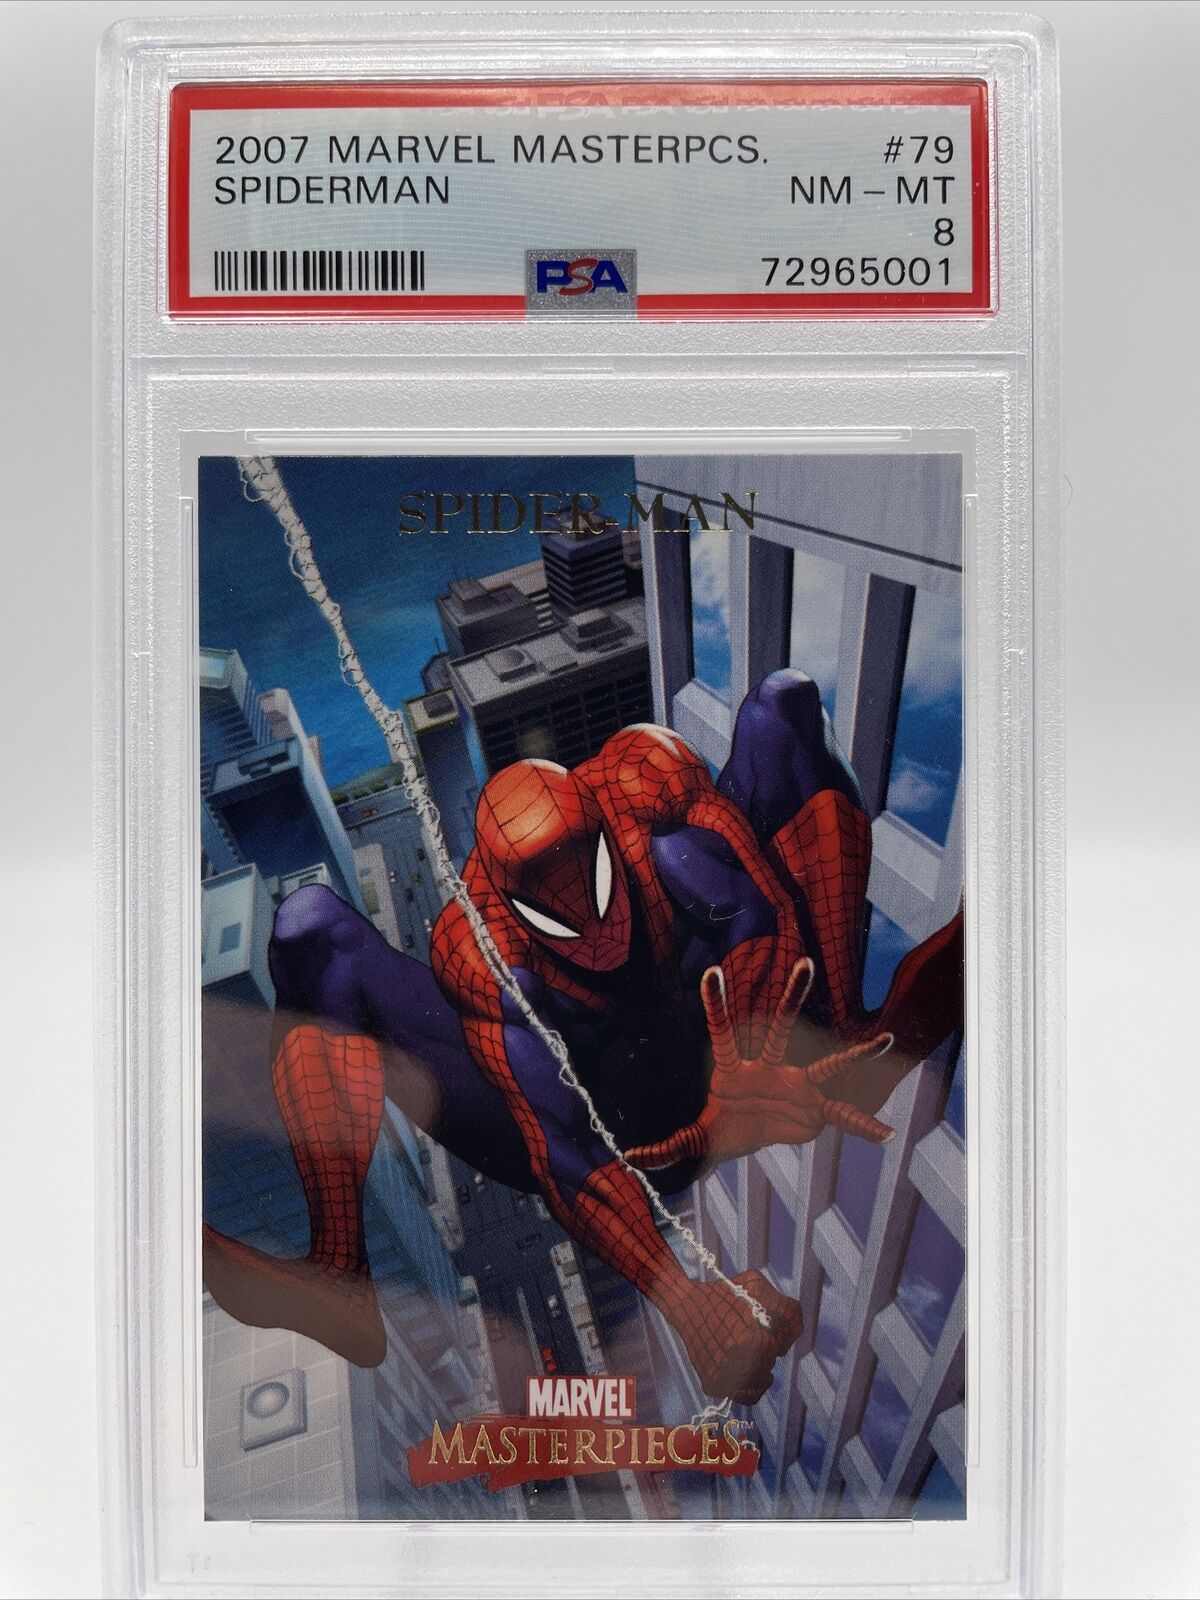 2007 Upper Deck Fleer Marvel Masterpieces SkyBox Spider-Man #79 PSA 8 NM-MT